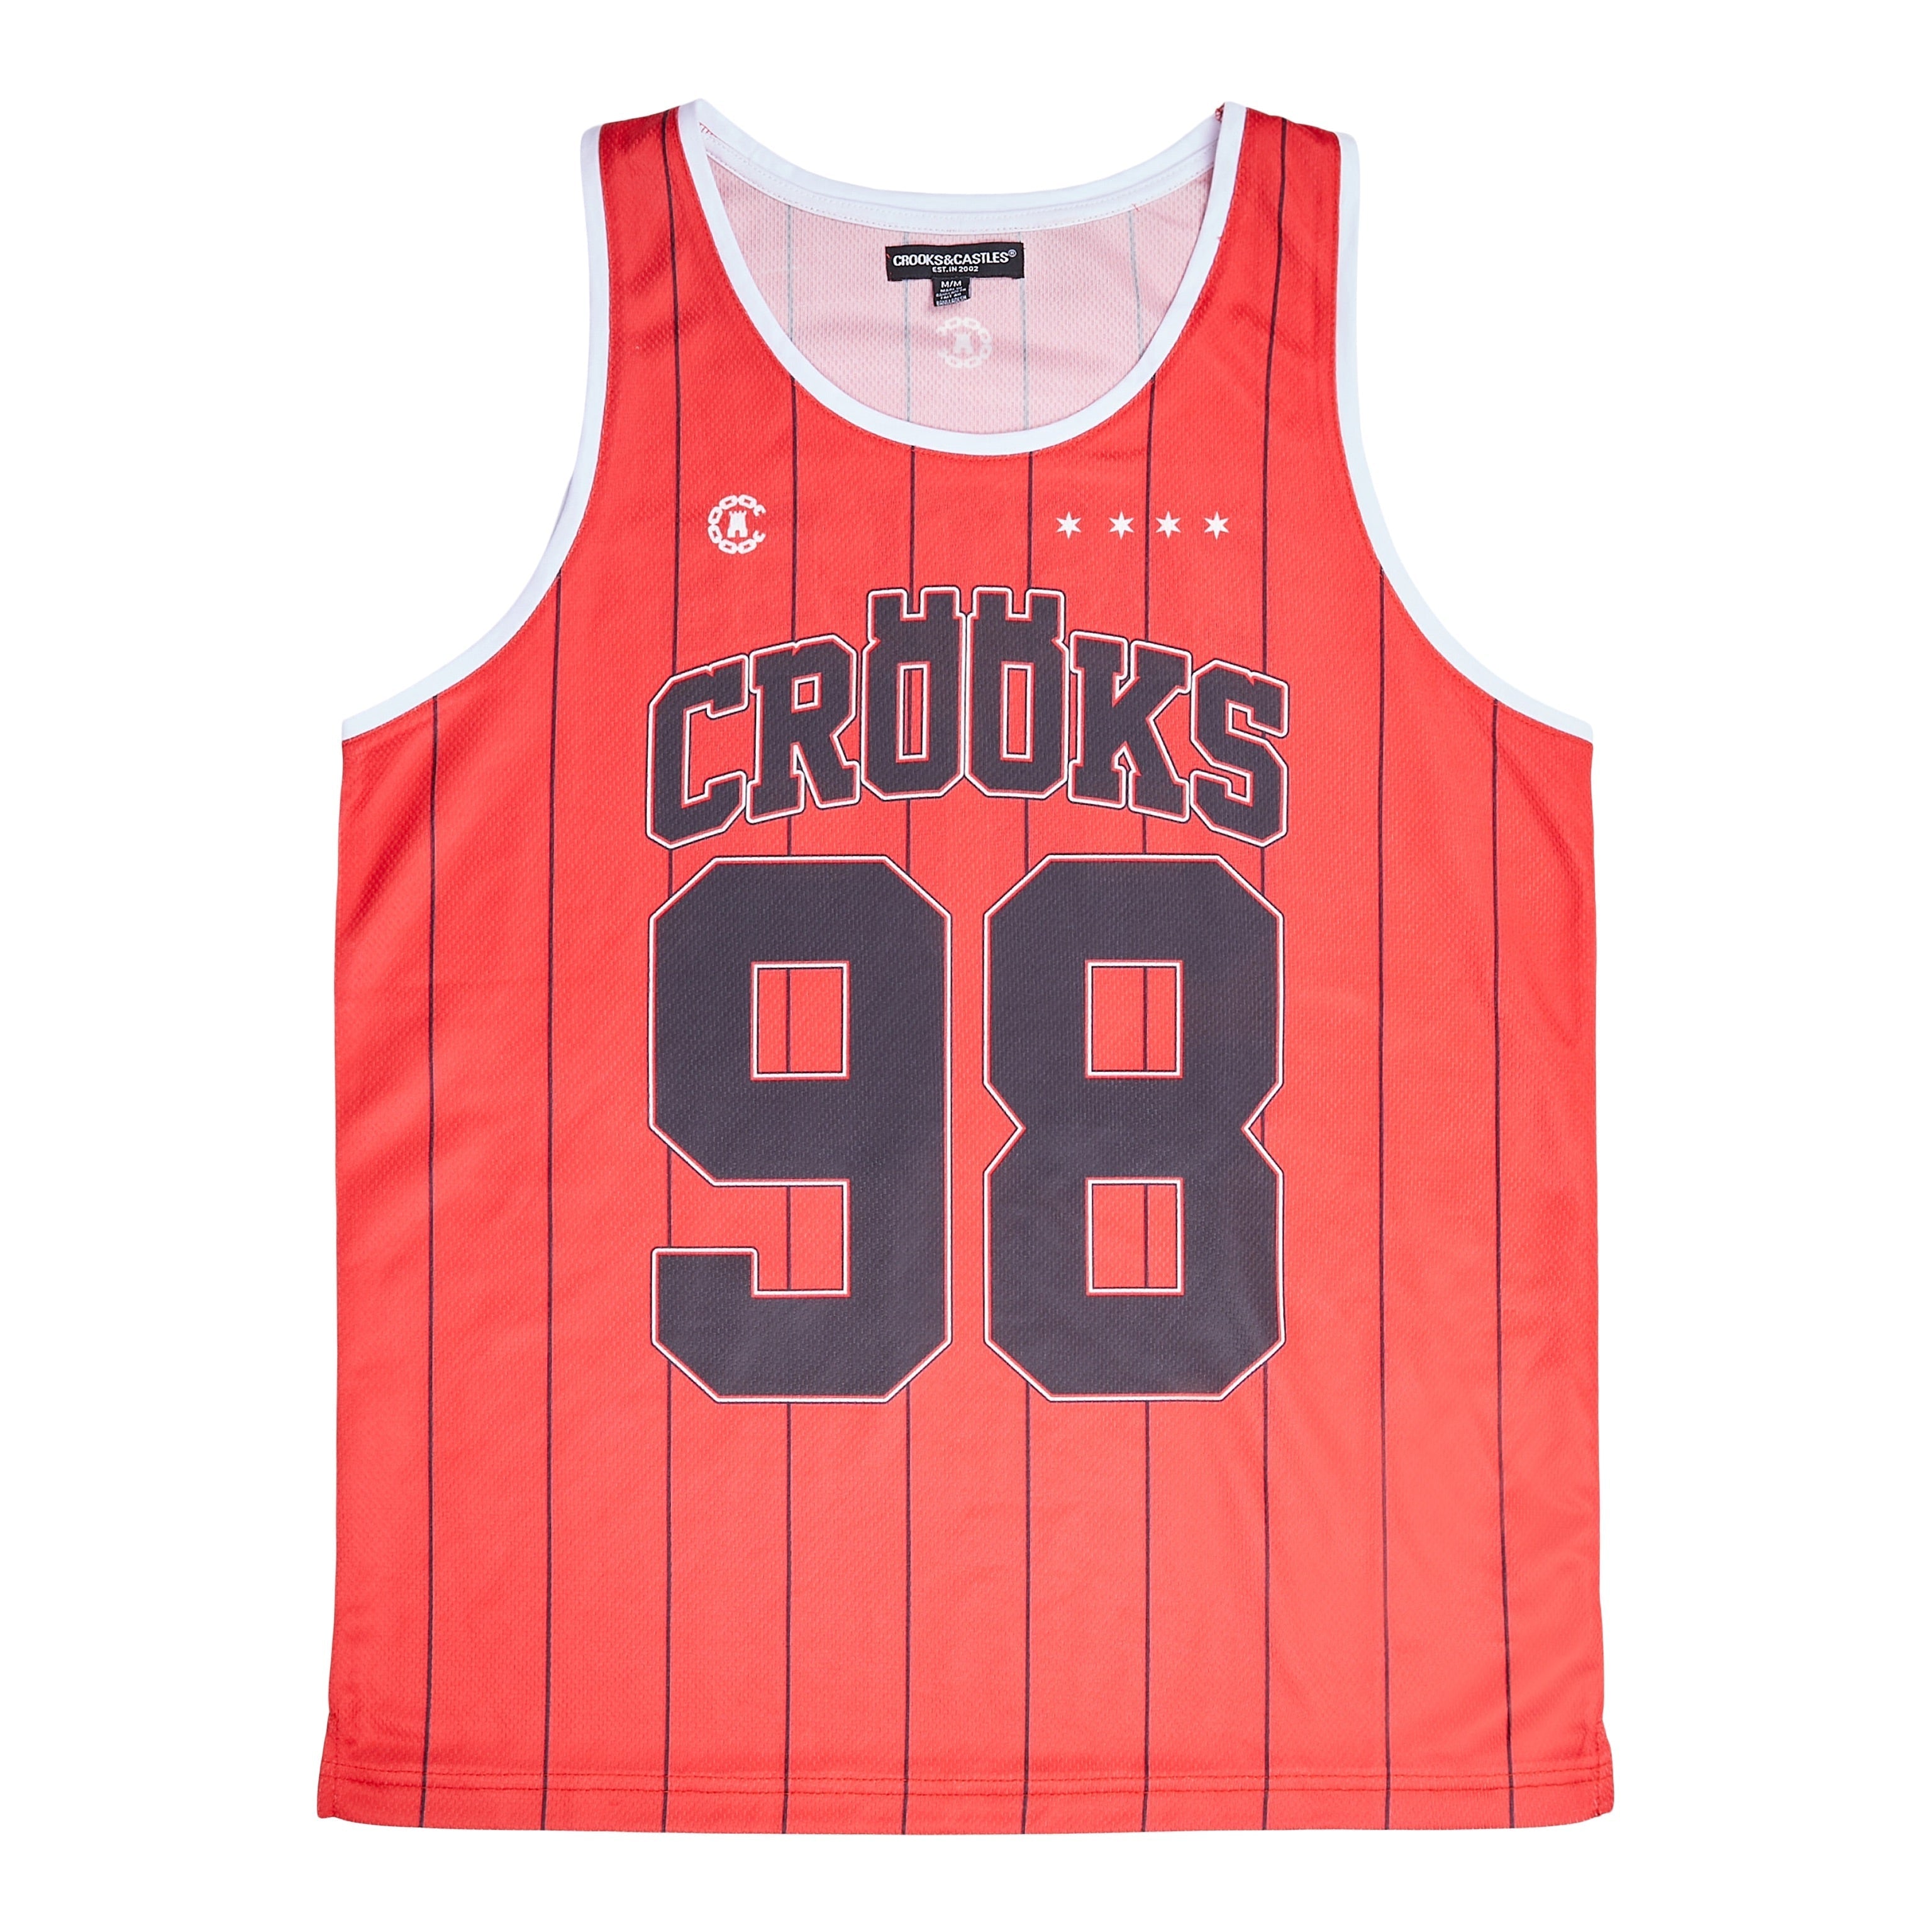 Crooks 98 Pinstripe Jersey